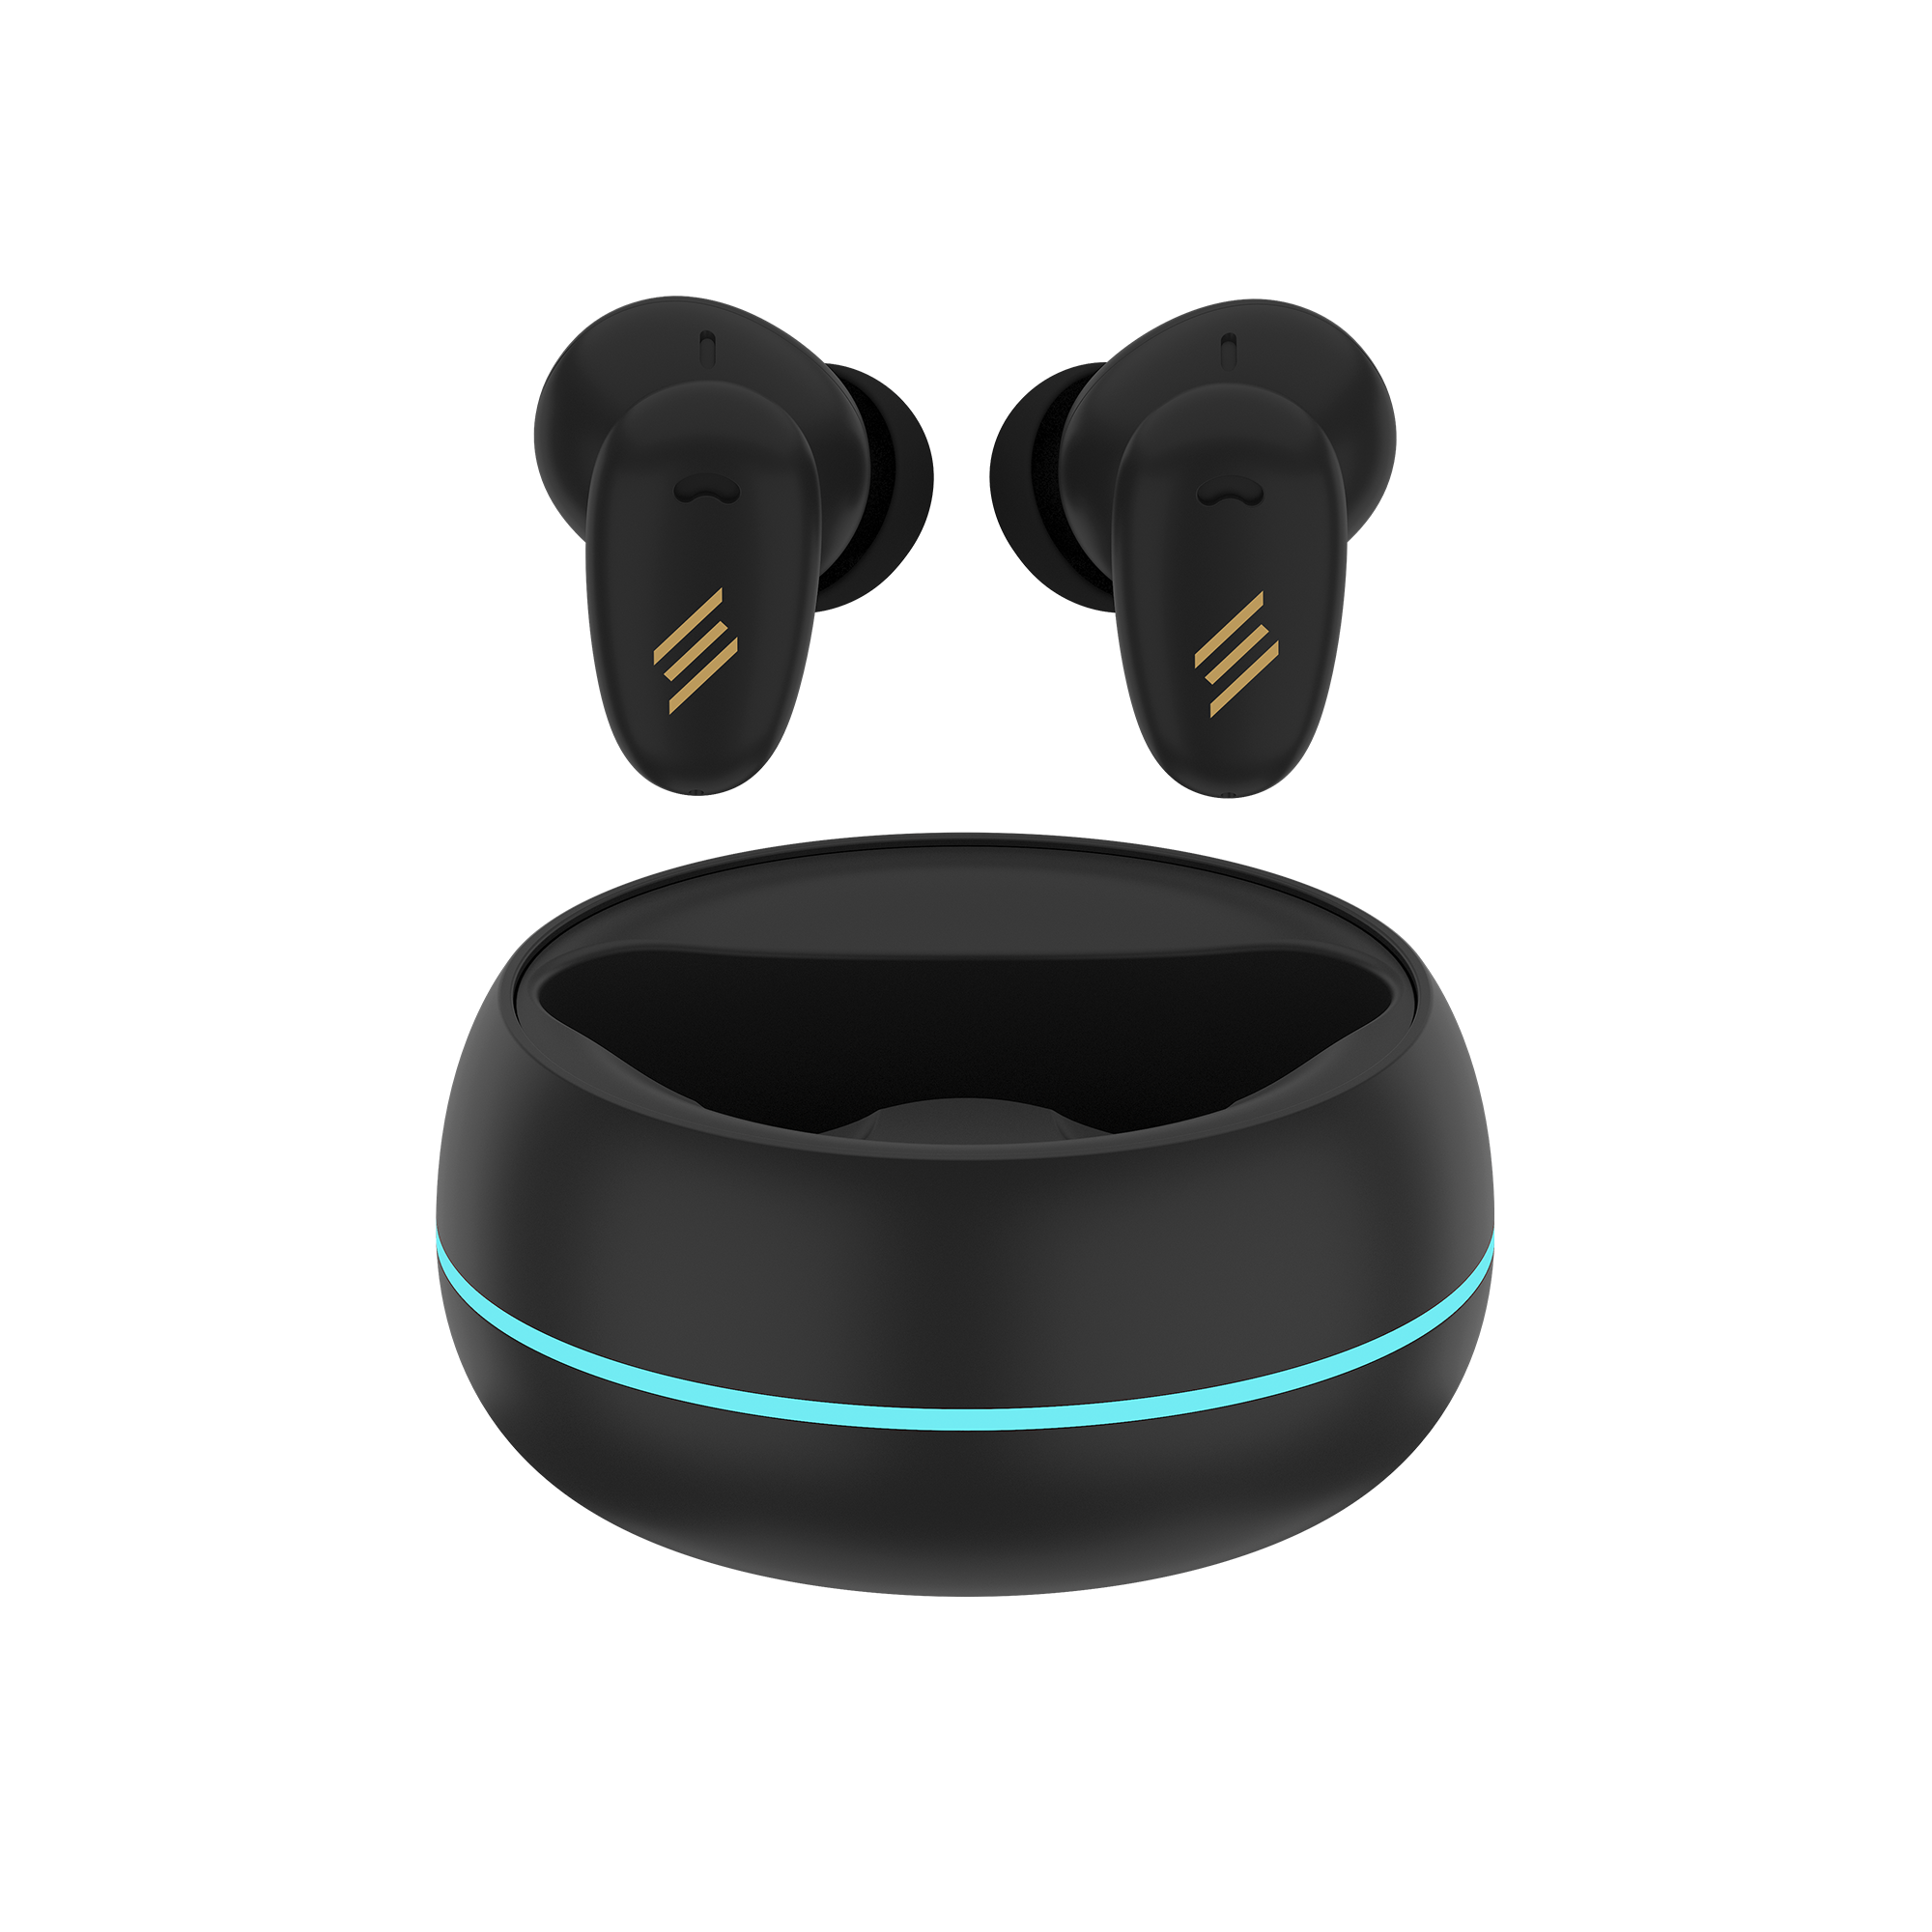  Smartix Premium ANC Earbuds ATOM - SBT01+ | Mobile Accessories | Halabh.com